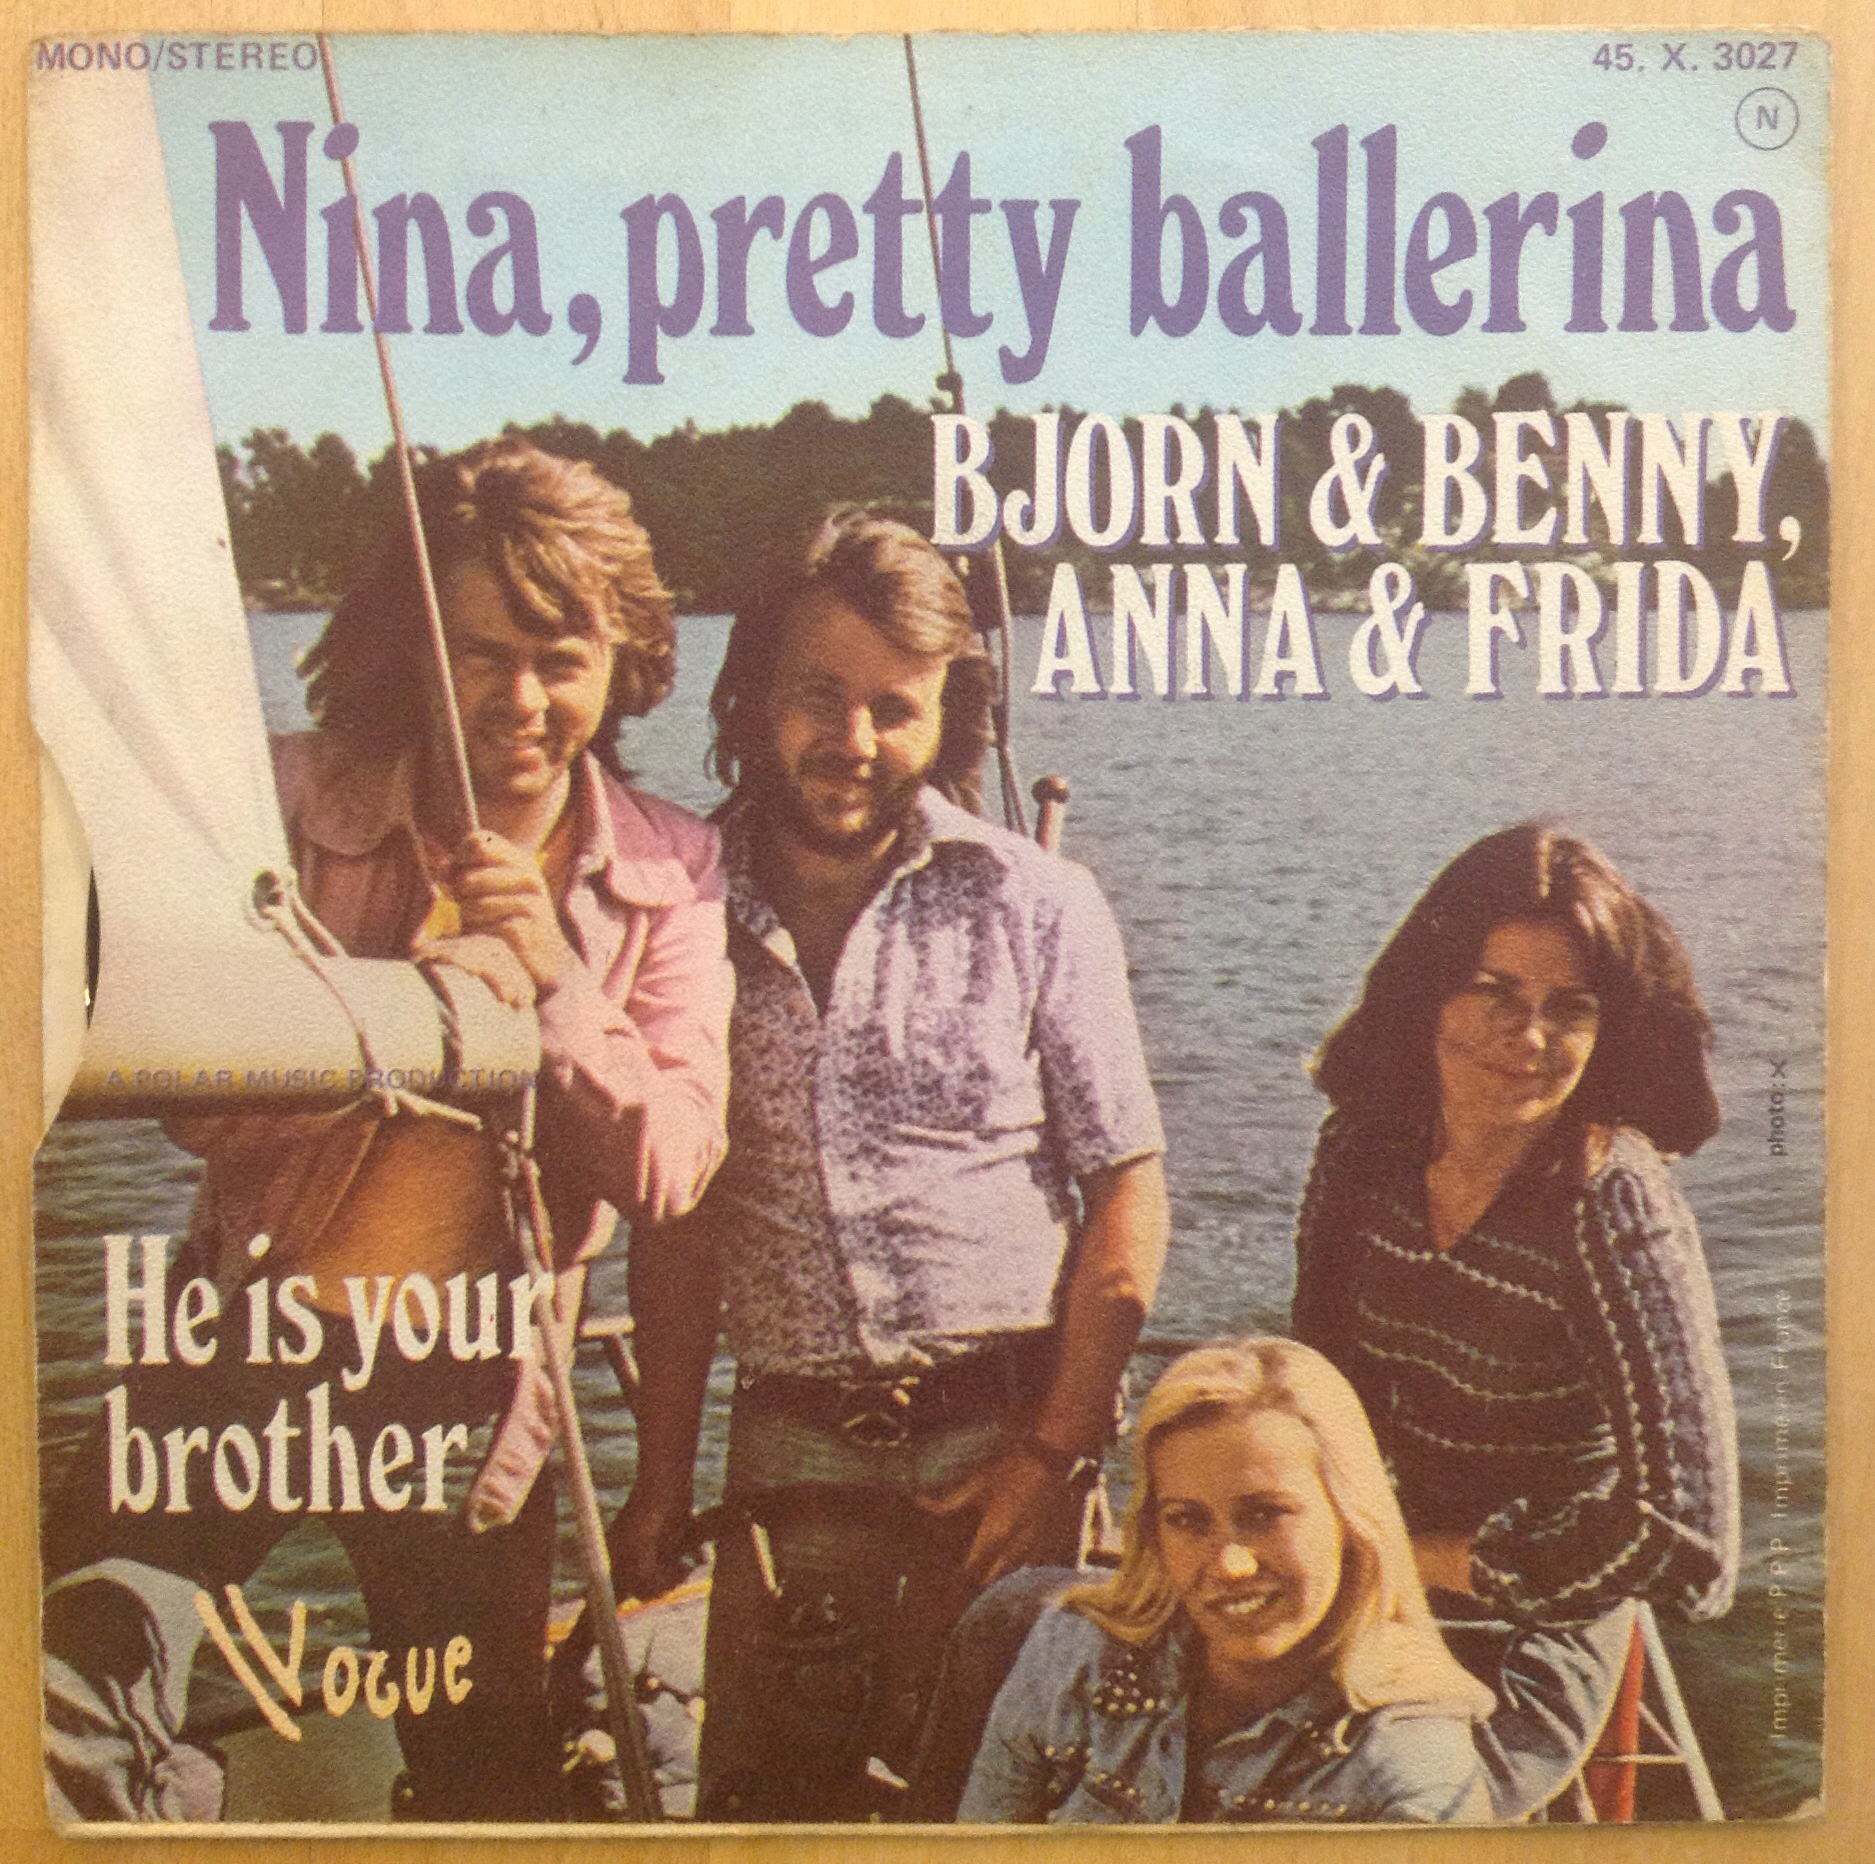 ABBA Fans Blog: Collection Update - Nina, Ballerina Single